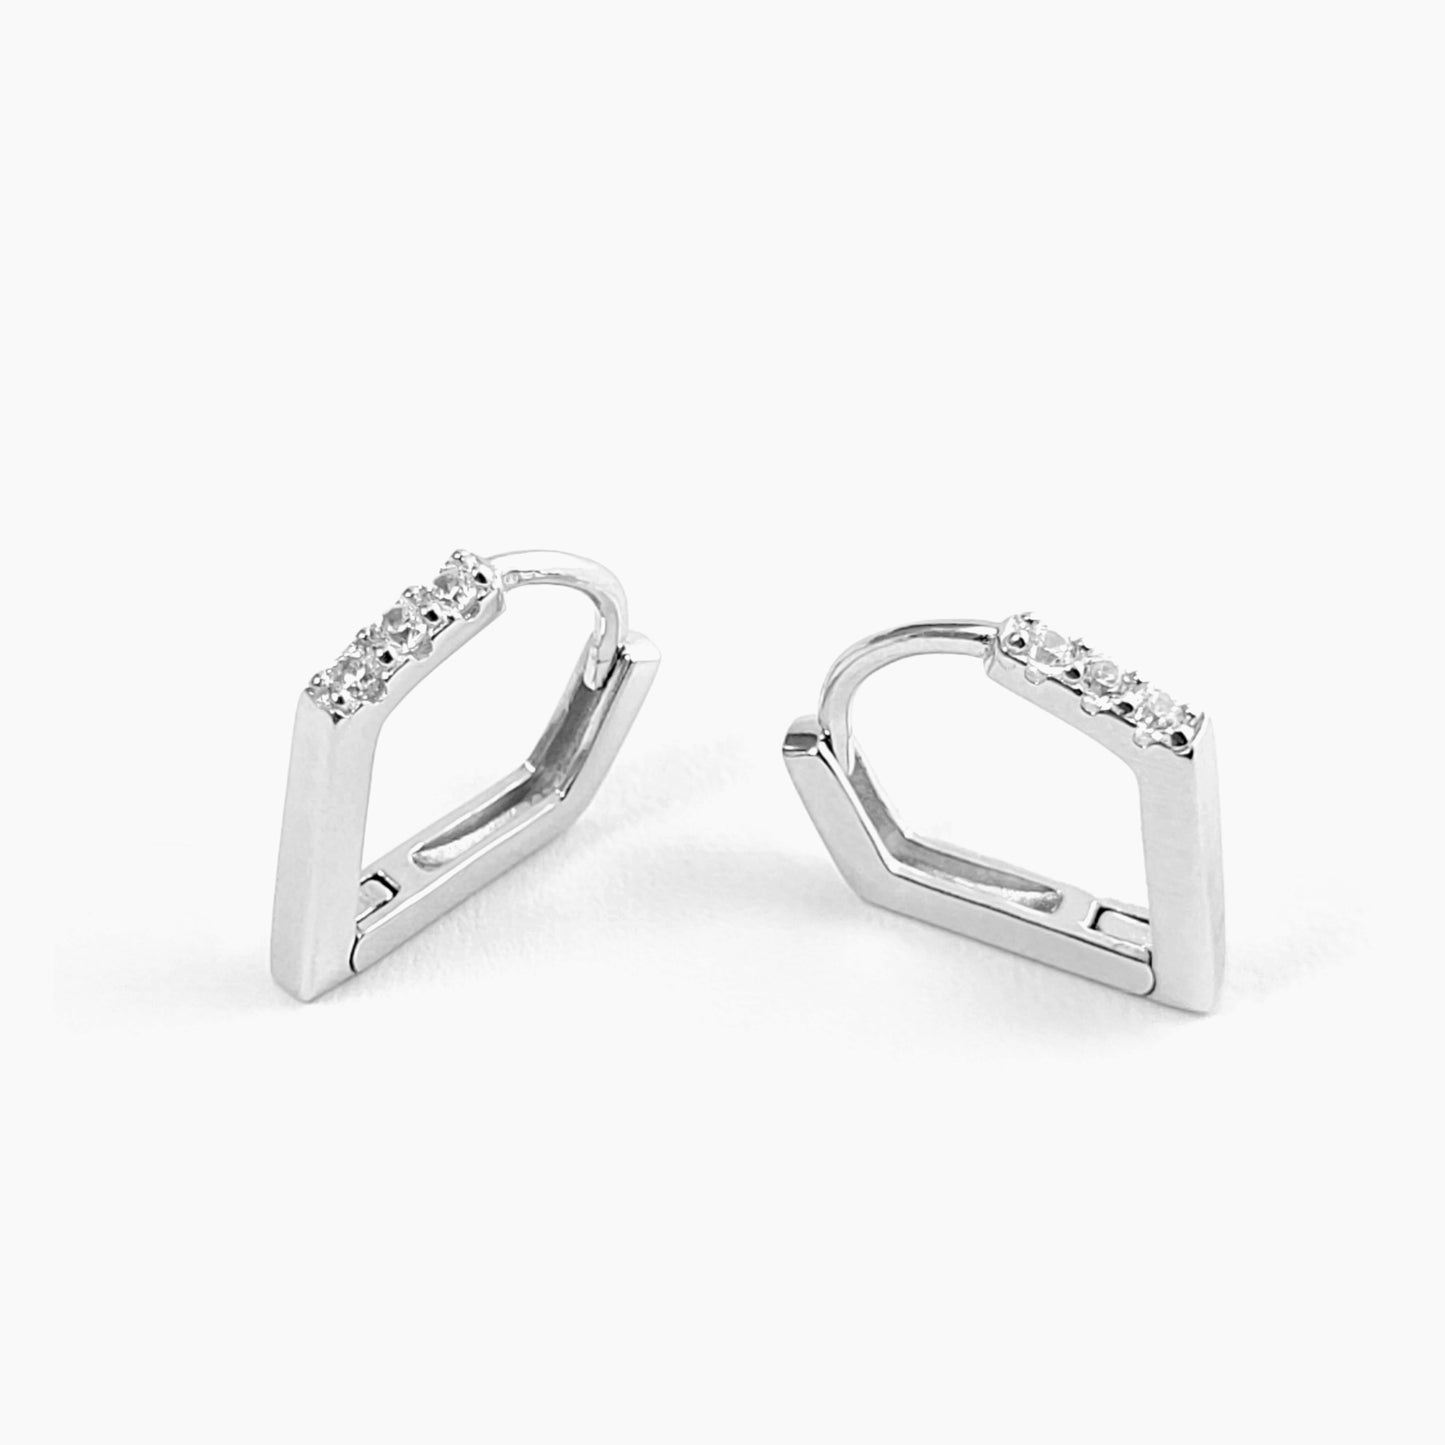 V-Shaped Hoop Earrings in Sterling Silver